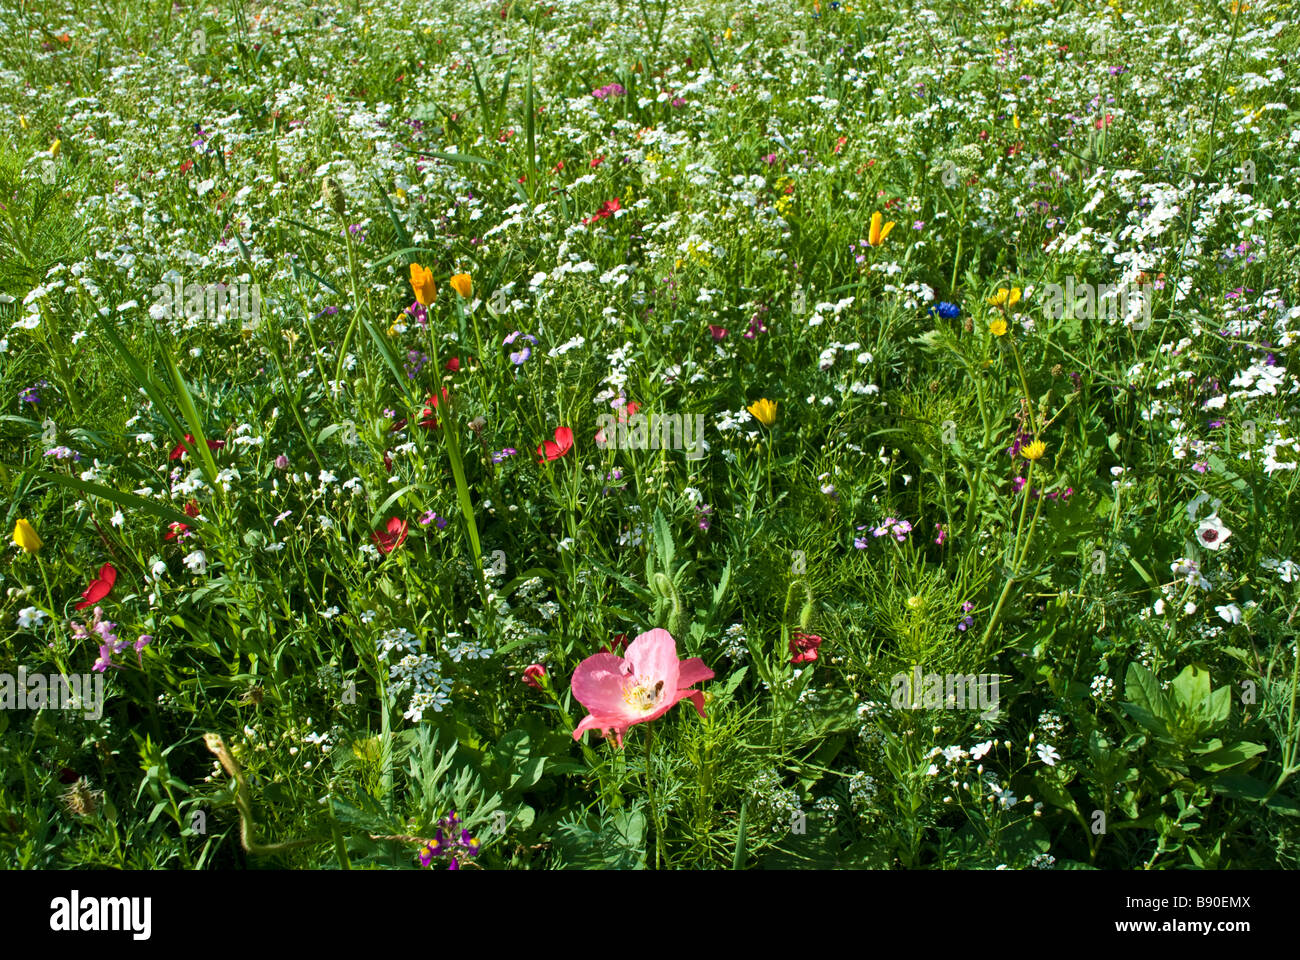 Meadow with colorful flowers like cornflowers and herbs | Wiese mit farbenfrohen Blumen und Kräutern Stock Photo